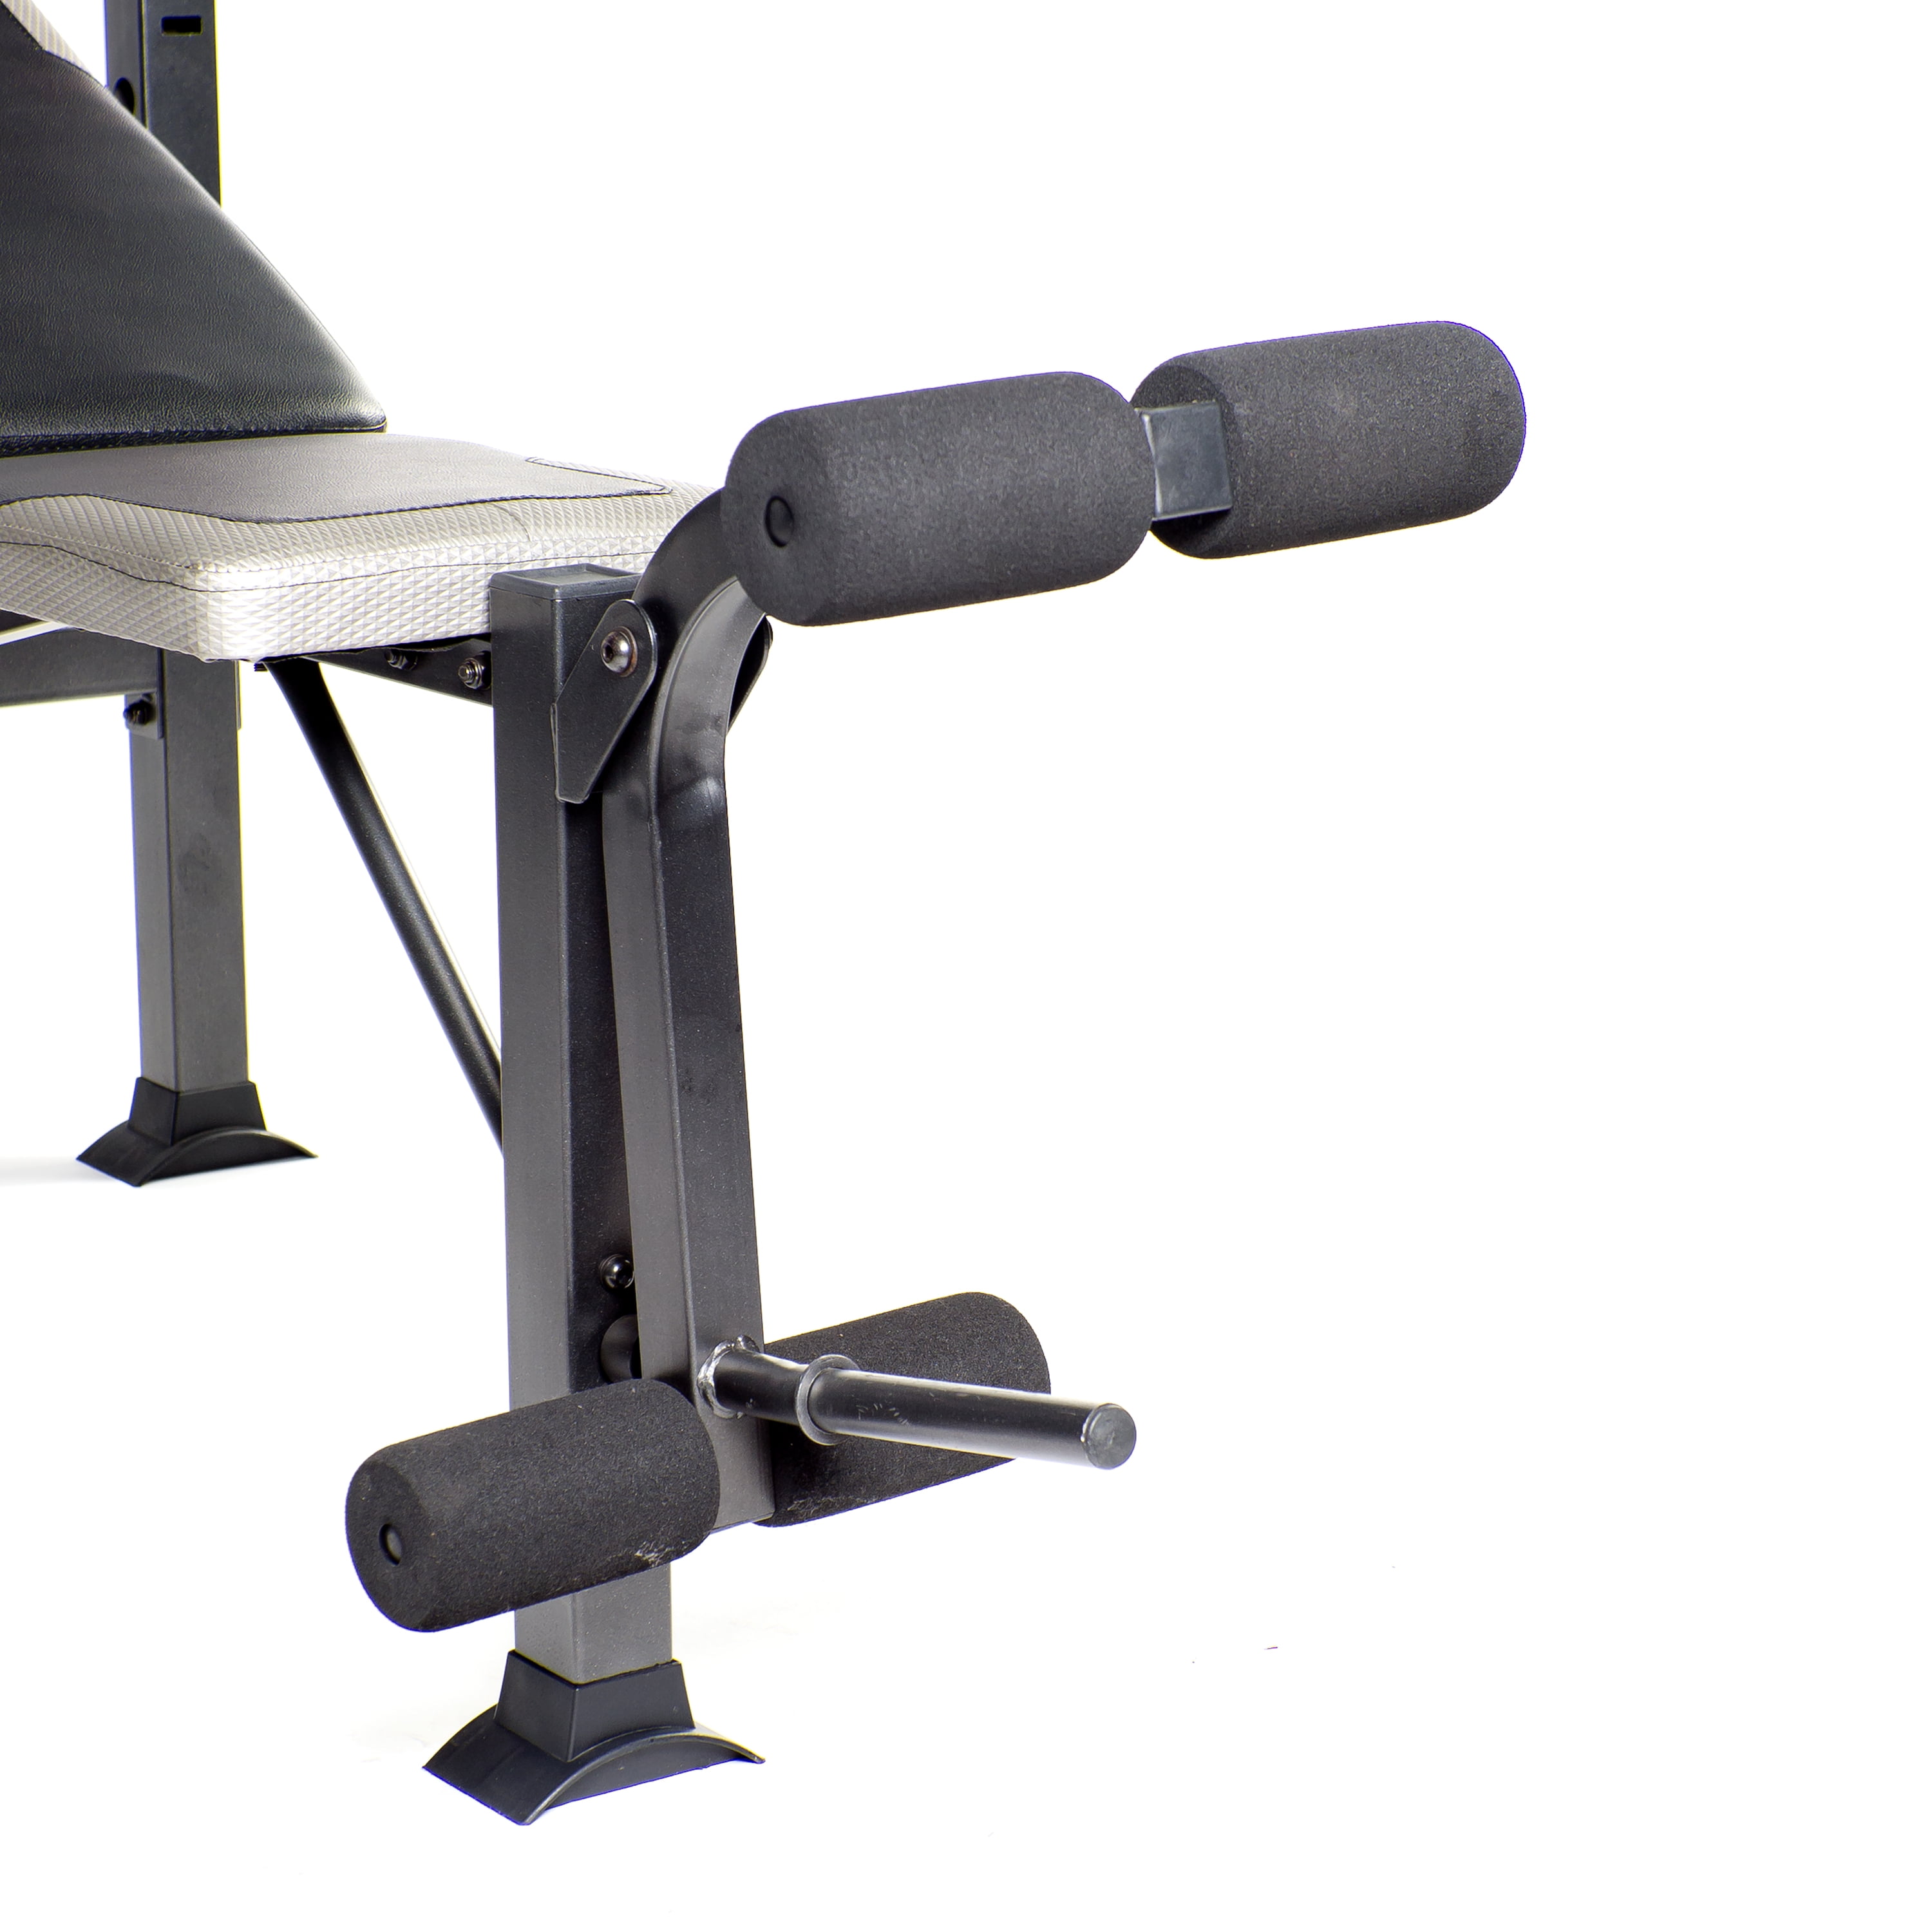 CAP Strength Standard Weight Bench with Leg Developer, 150lb upright weight capacity